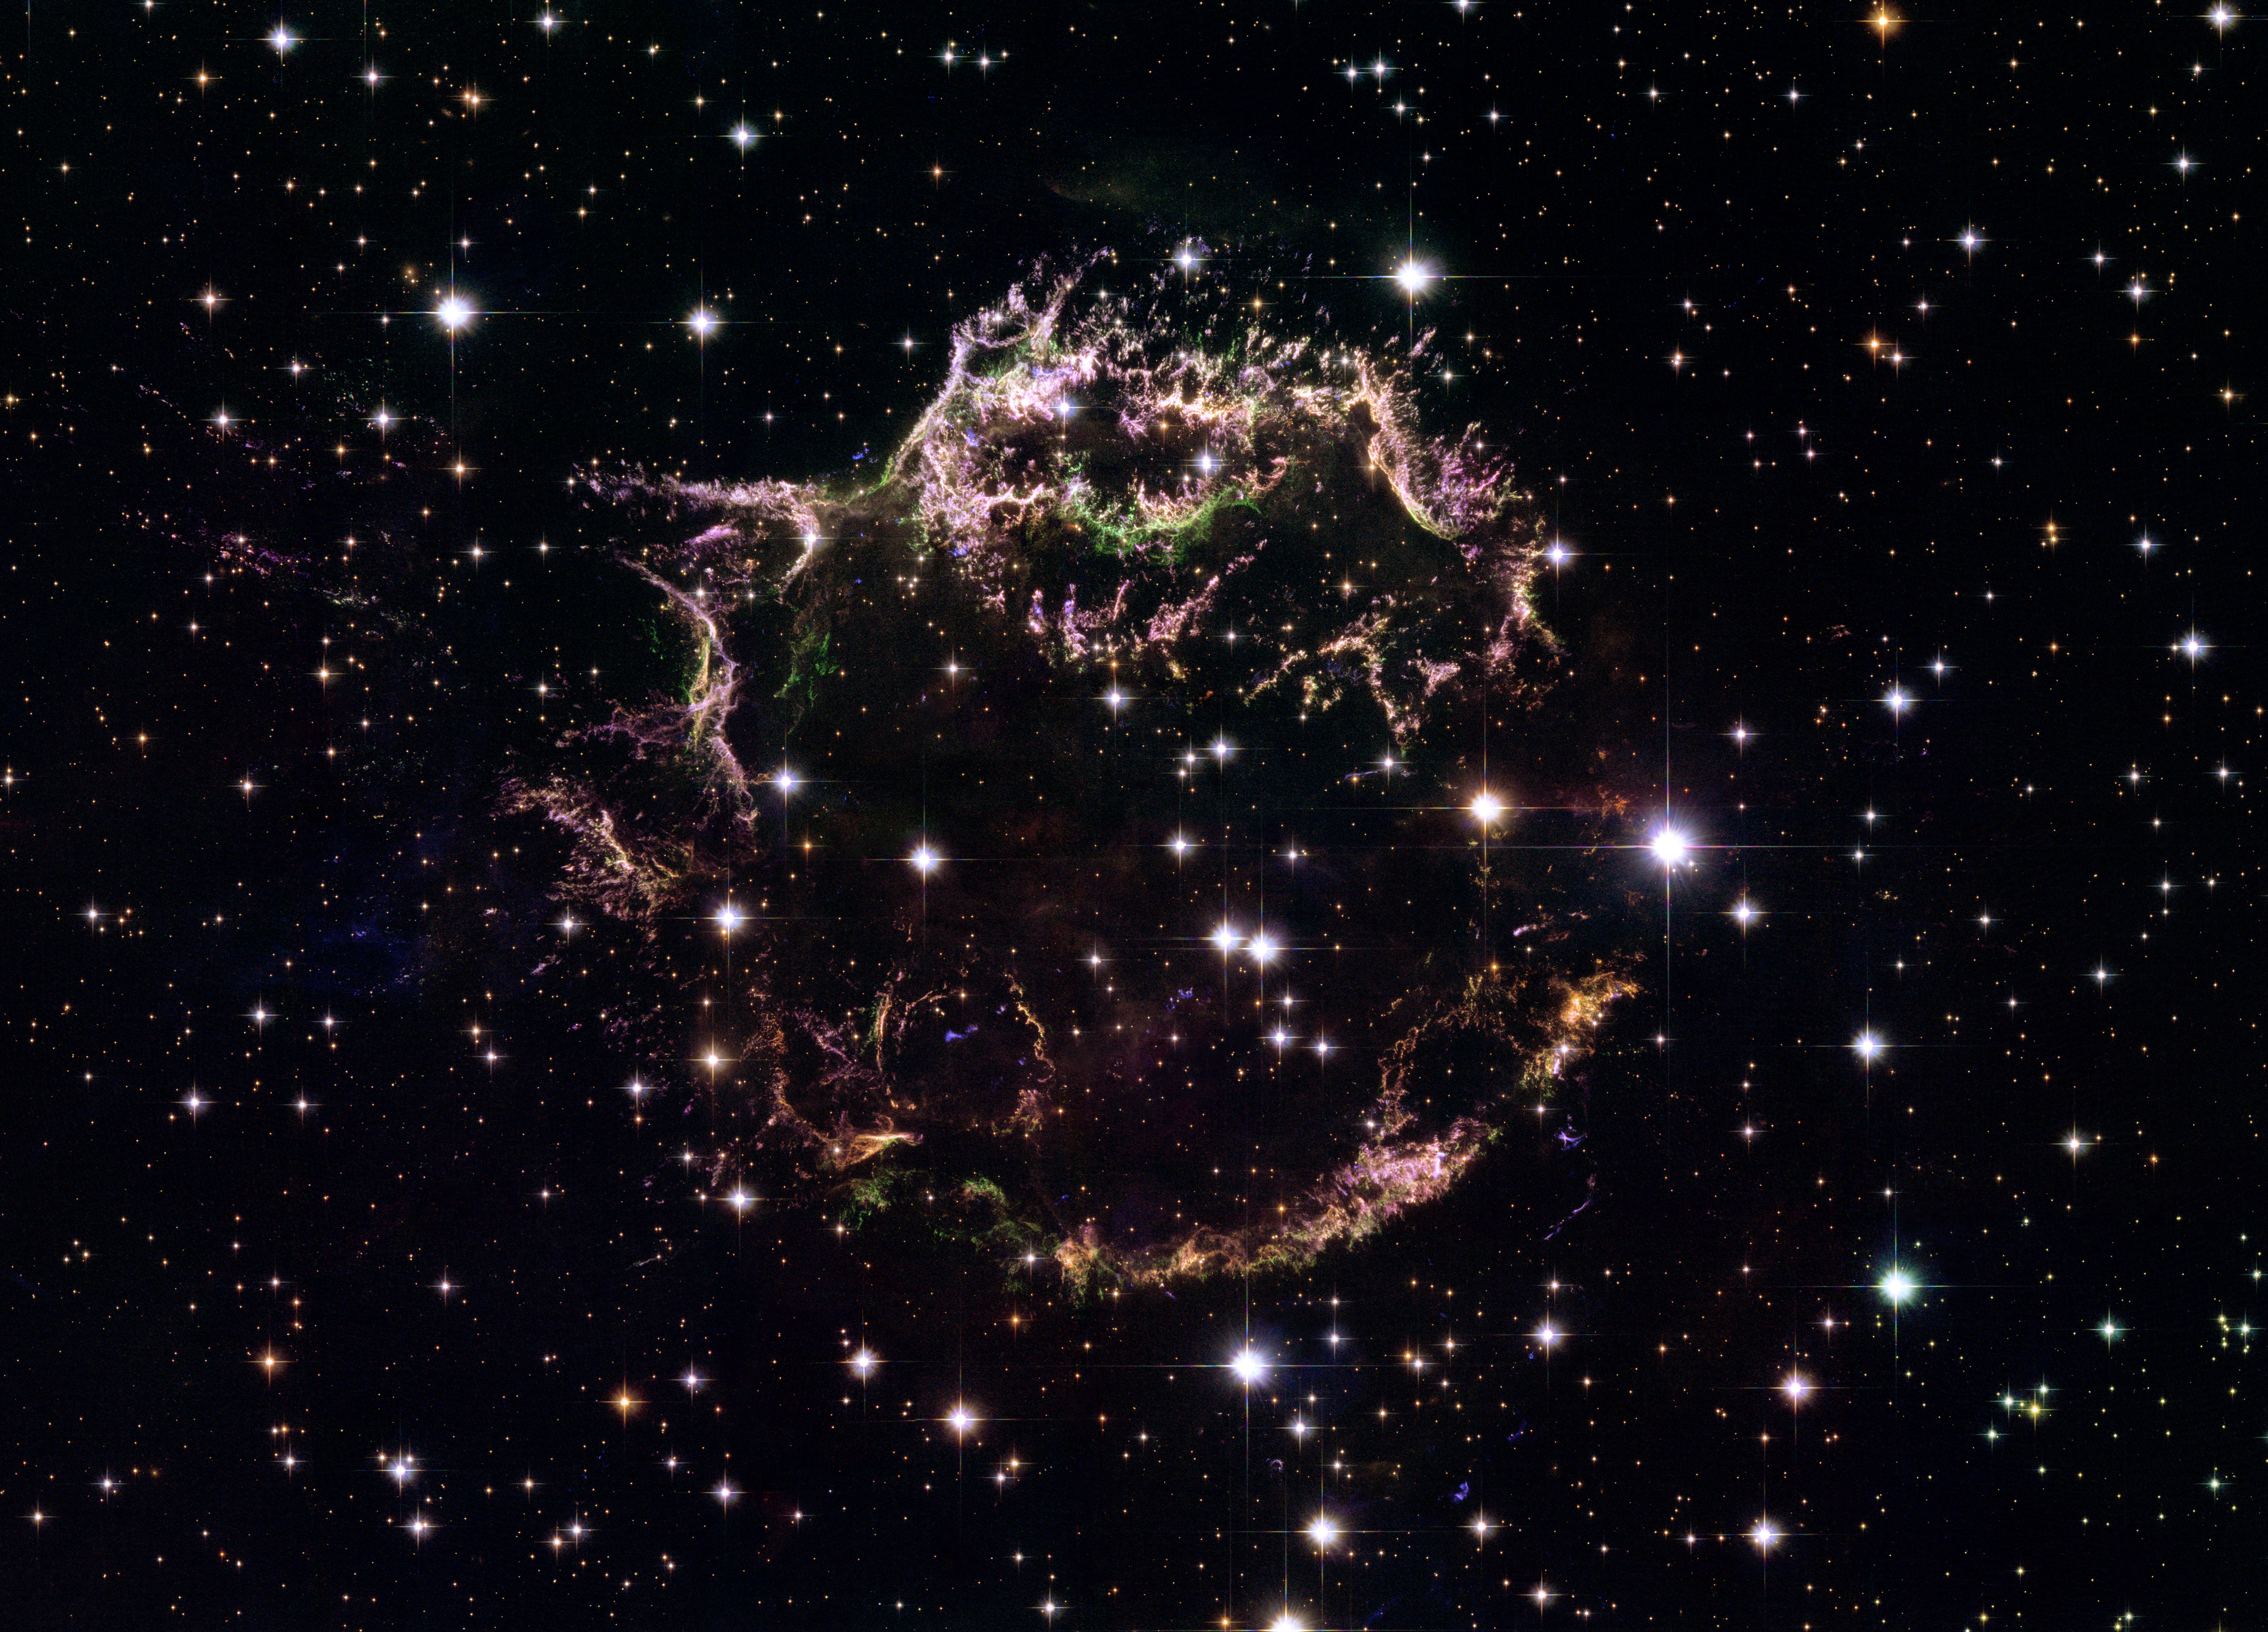 https://www.esa.int/var/esa/storage/images/esa_multimedia/images/2006/08/hubble_s_view_of_supernova_explosion_cassiopeia_a2/18245292-2-eng-GB/Hubble_s_view_of_supernova_explosion_Cassiopeia_A.jpg